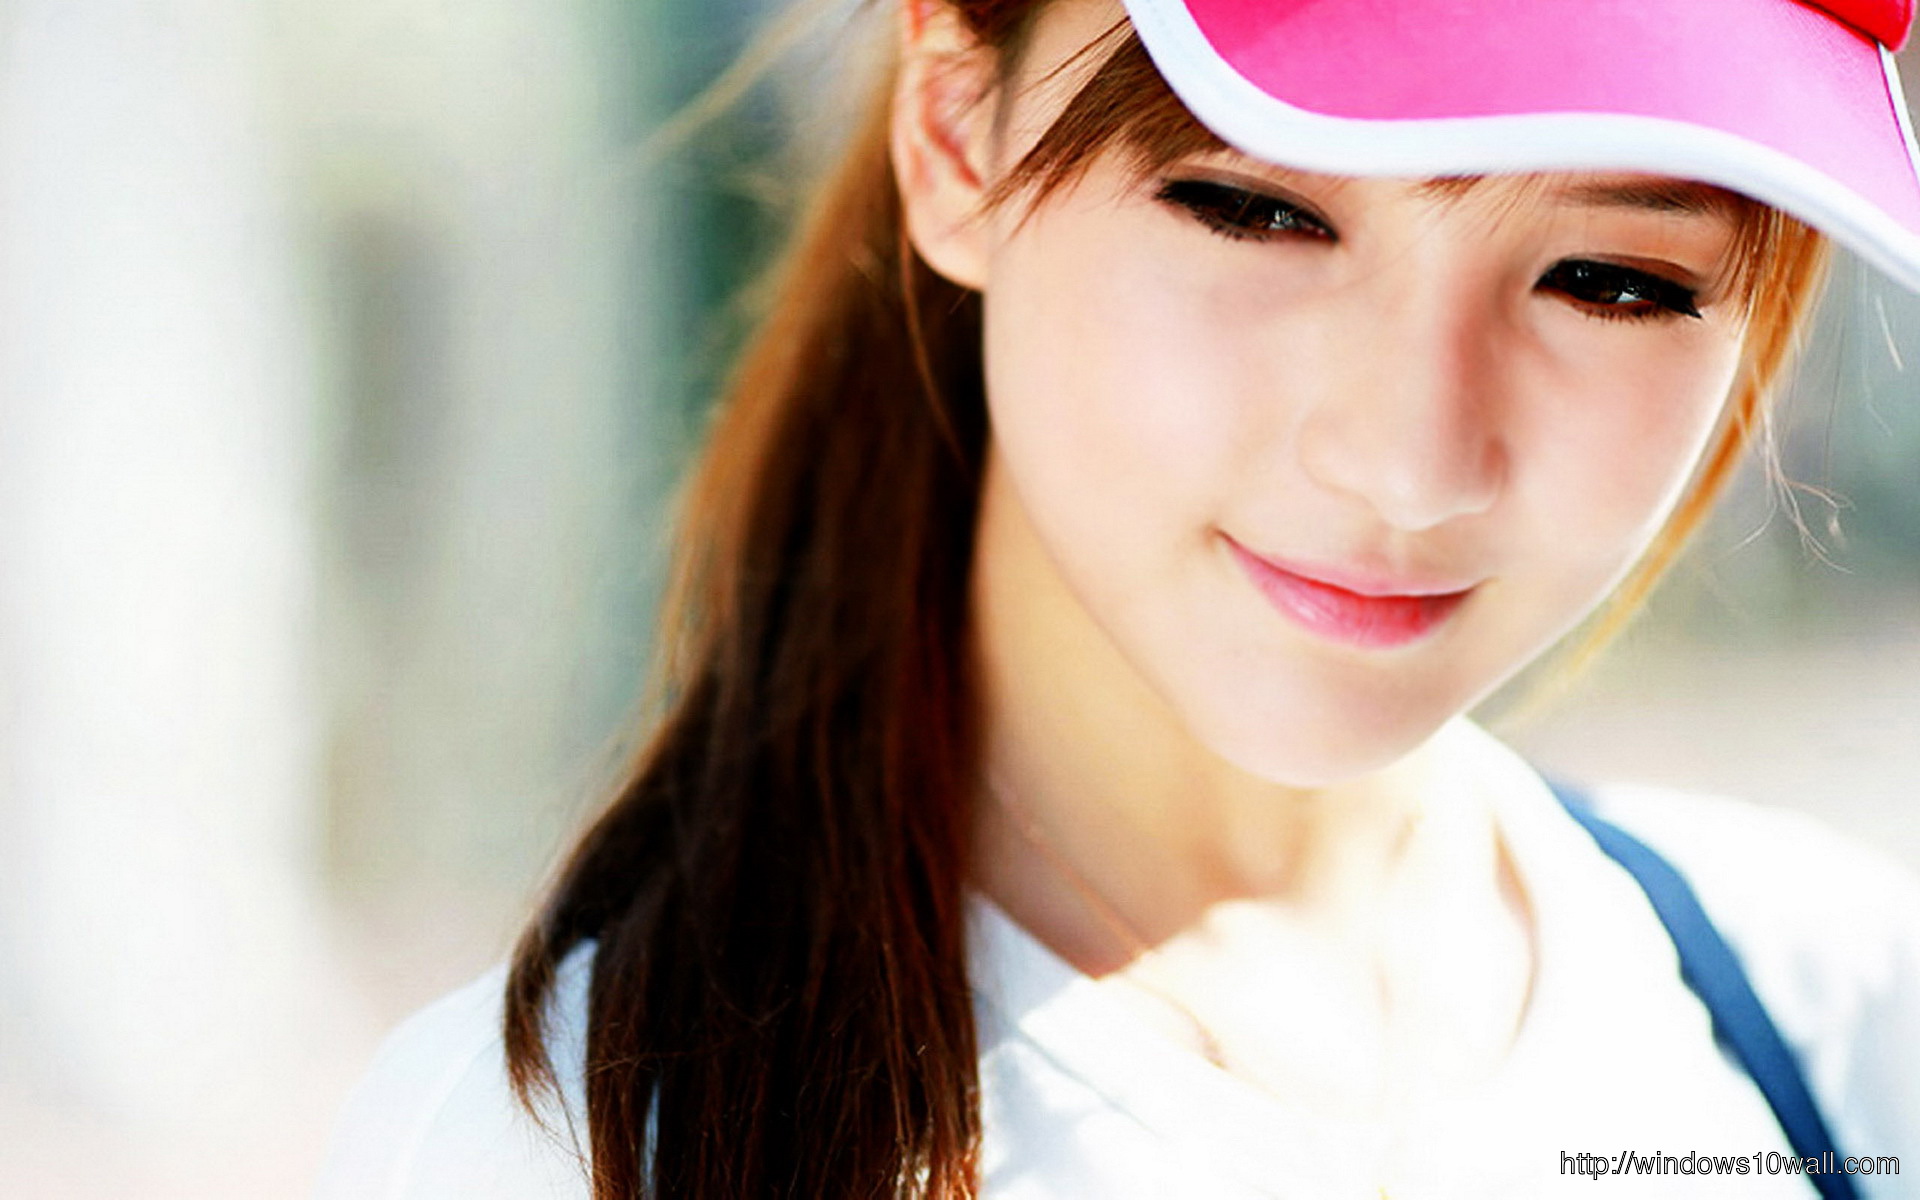 Gorgeous Asian Girl Background Wallpaper